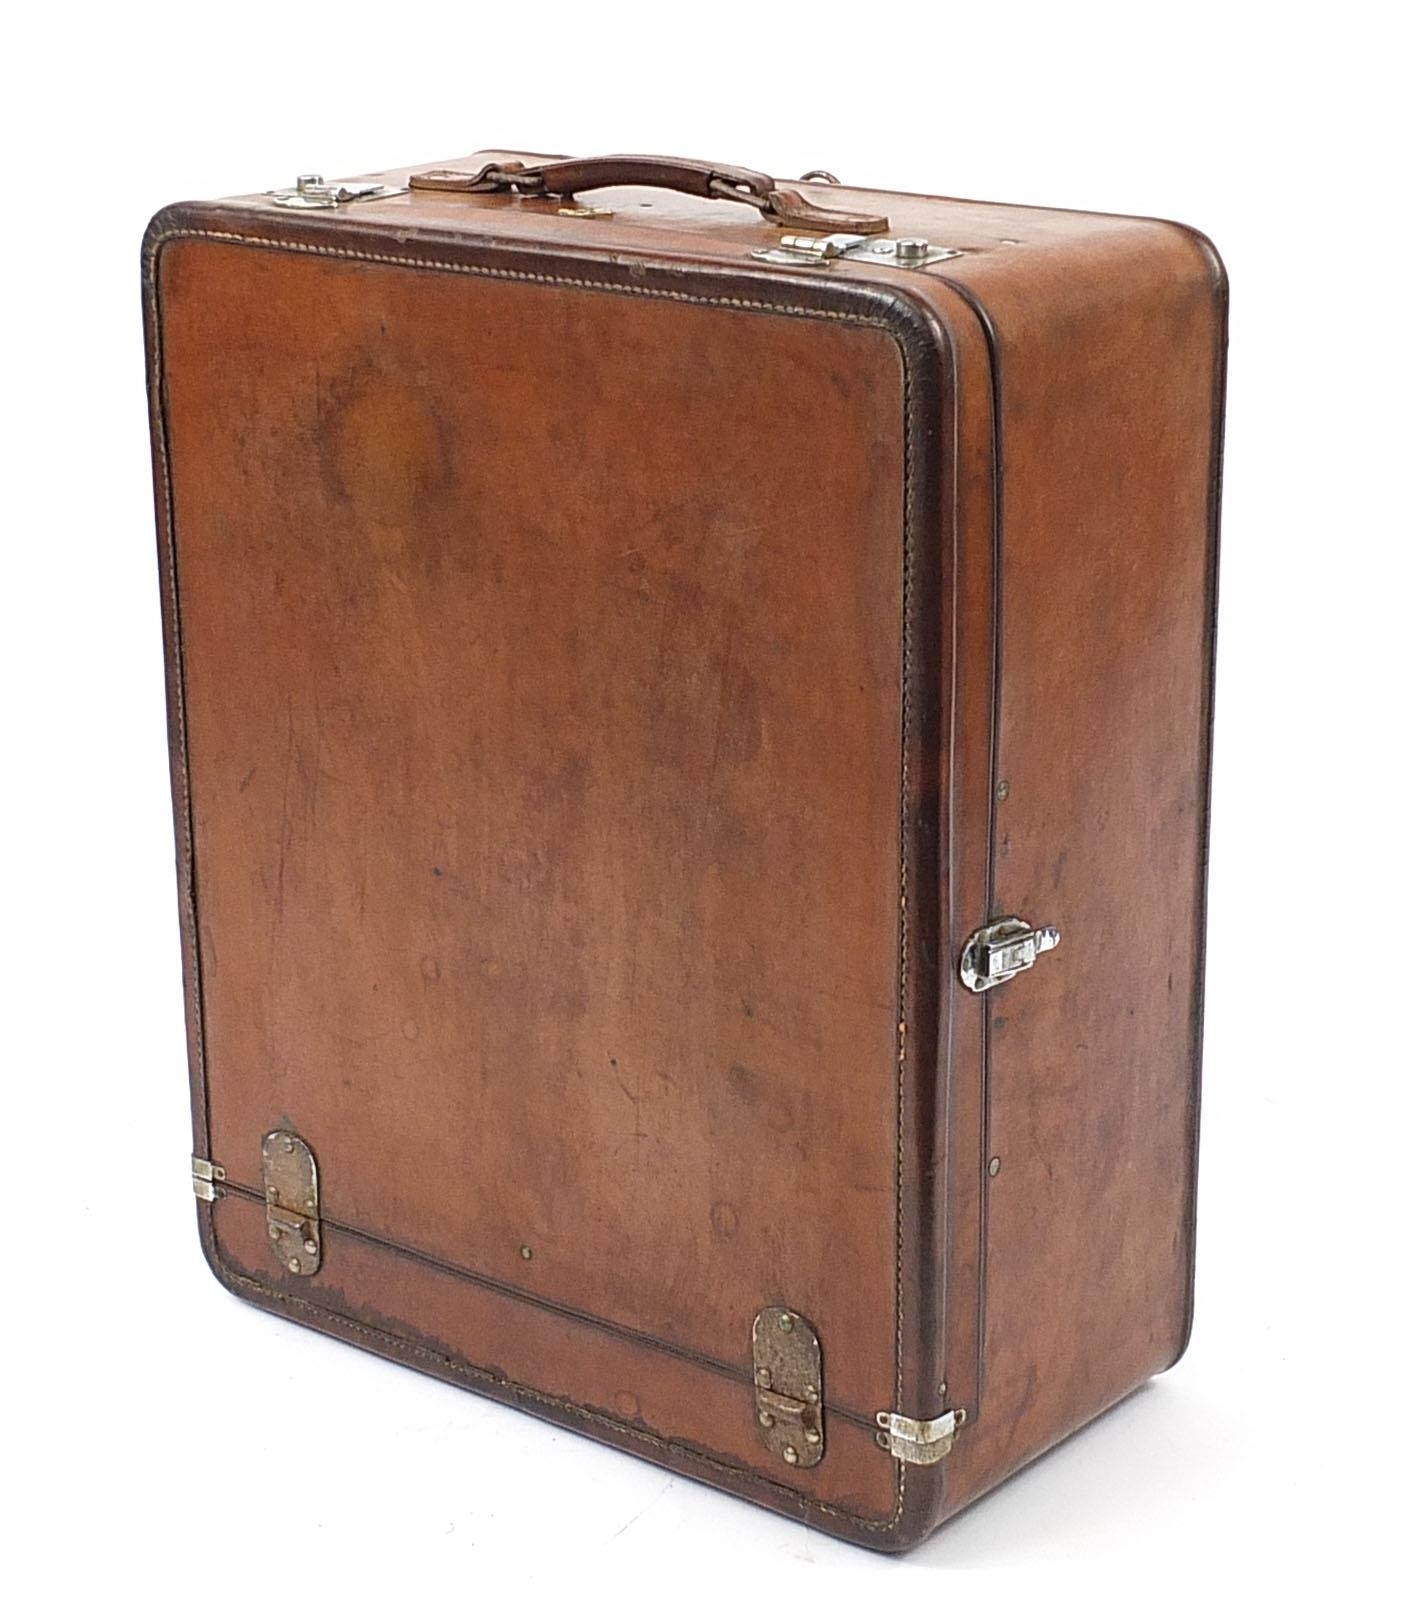 Vintage Rev Robe leather case impressed GP, 24cm H x 48.5cm W x 59cm D - Image 9 of 10